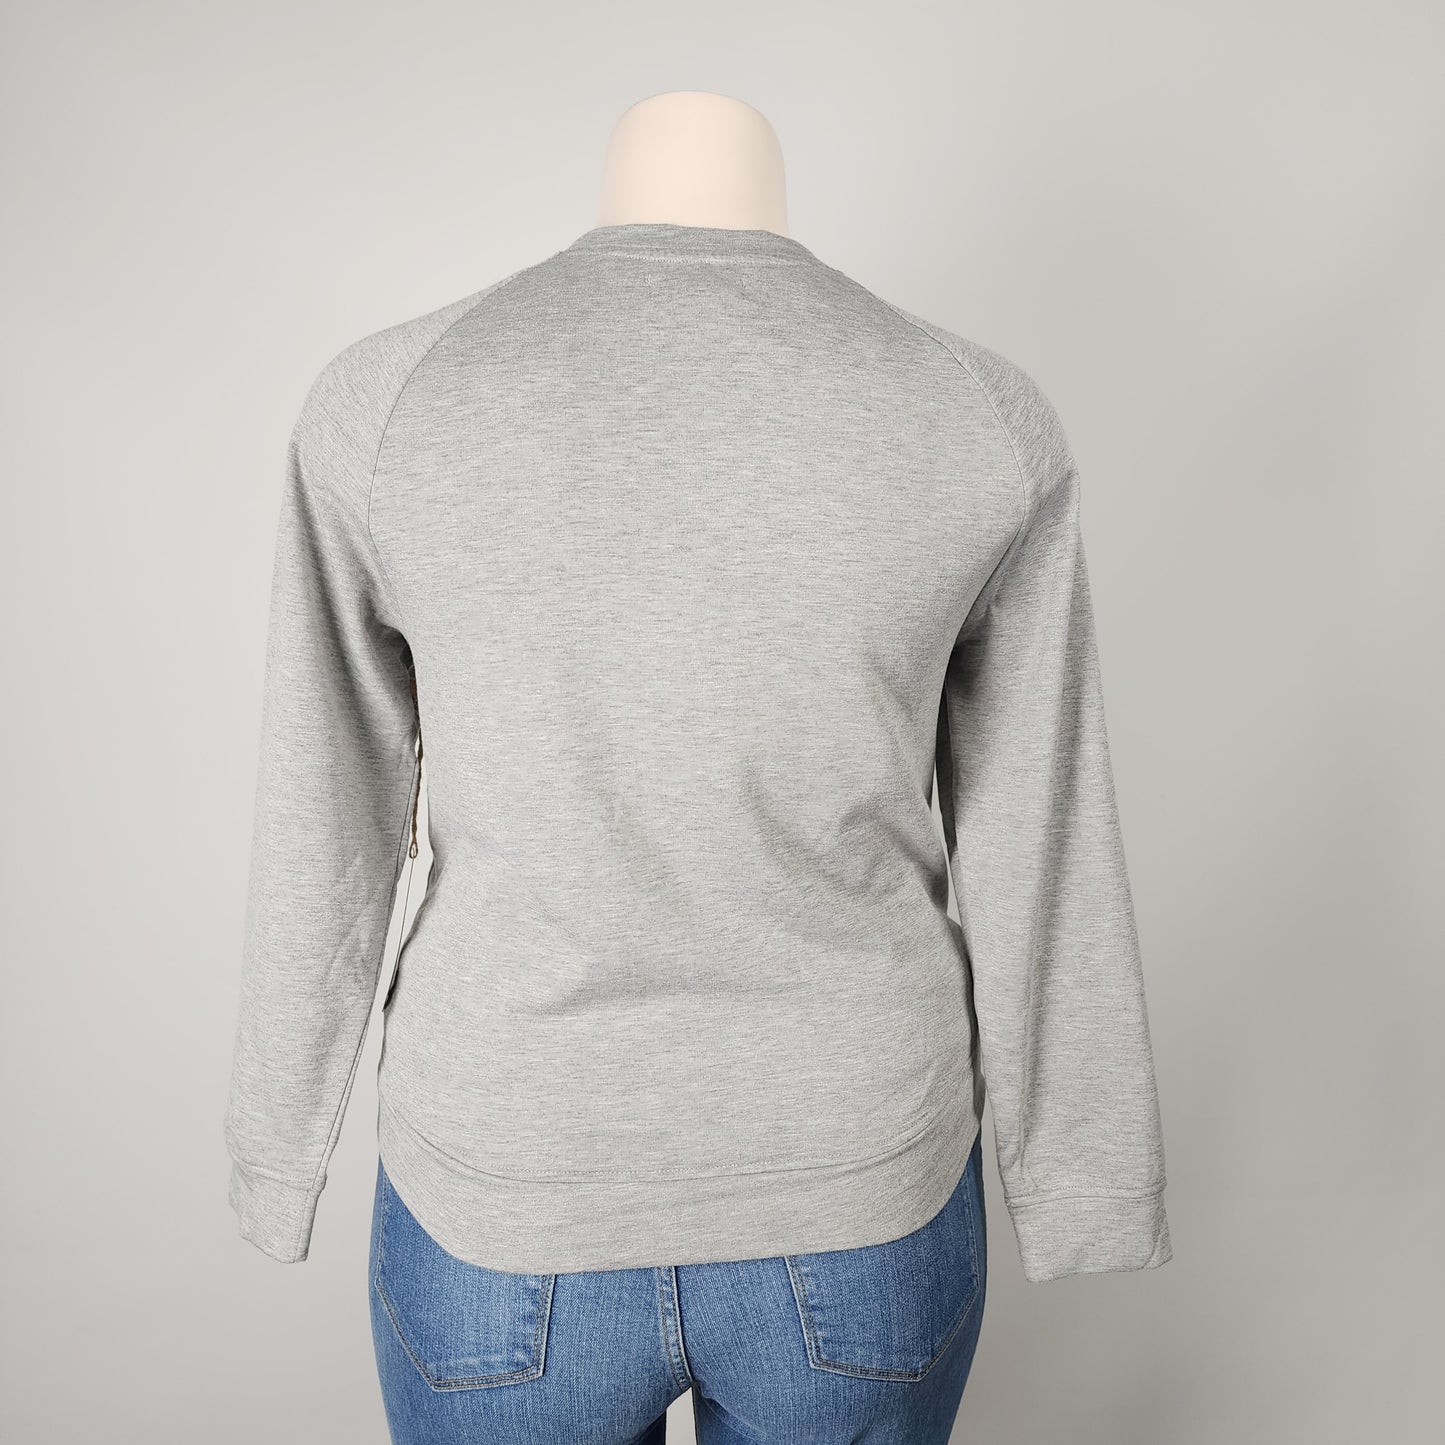 Rae Dunn Grey Love Sweatshirt Size XL